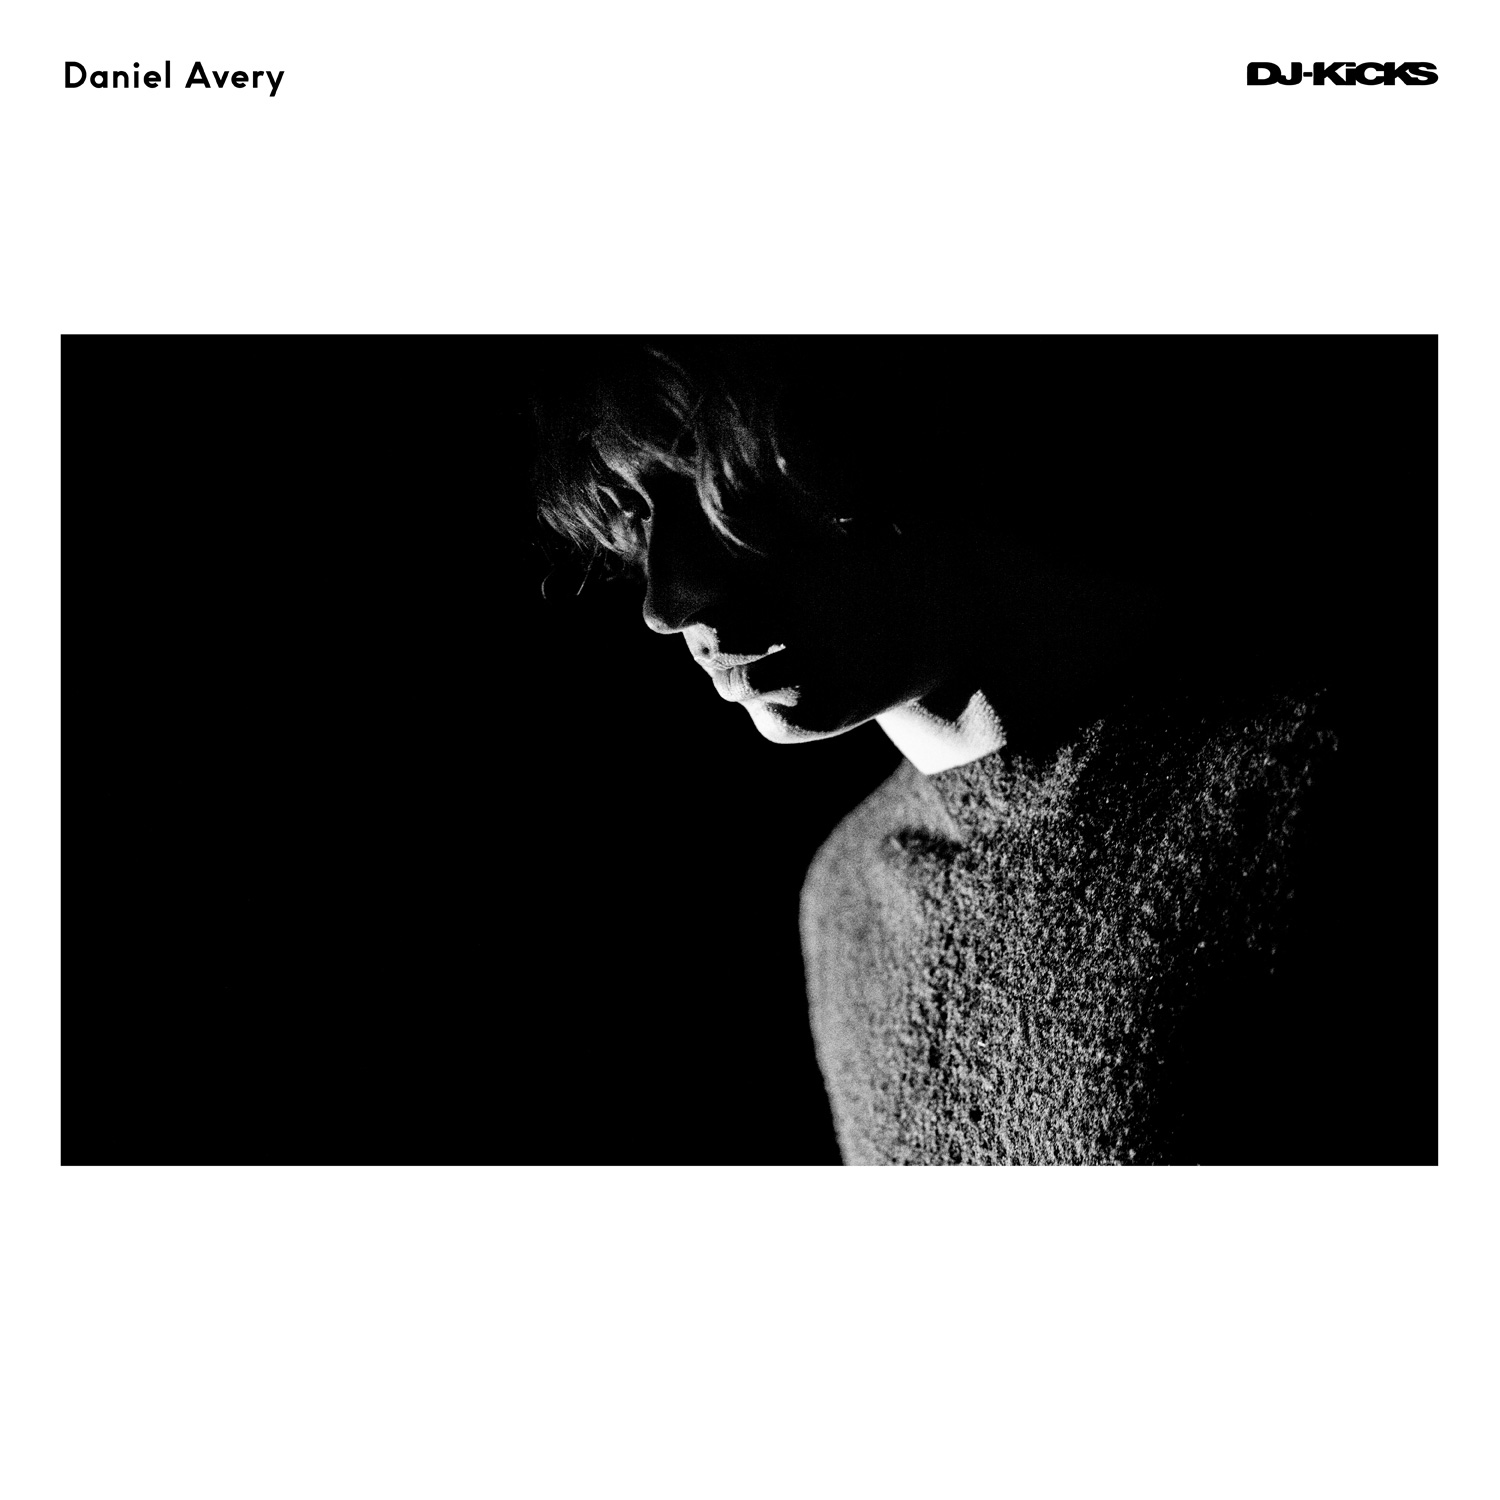 Daniel Avery streams 'DJ Kicks remix' ahead of November 11th release